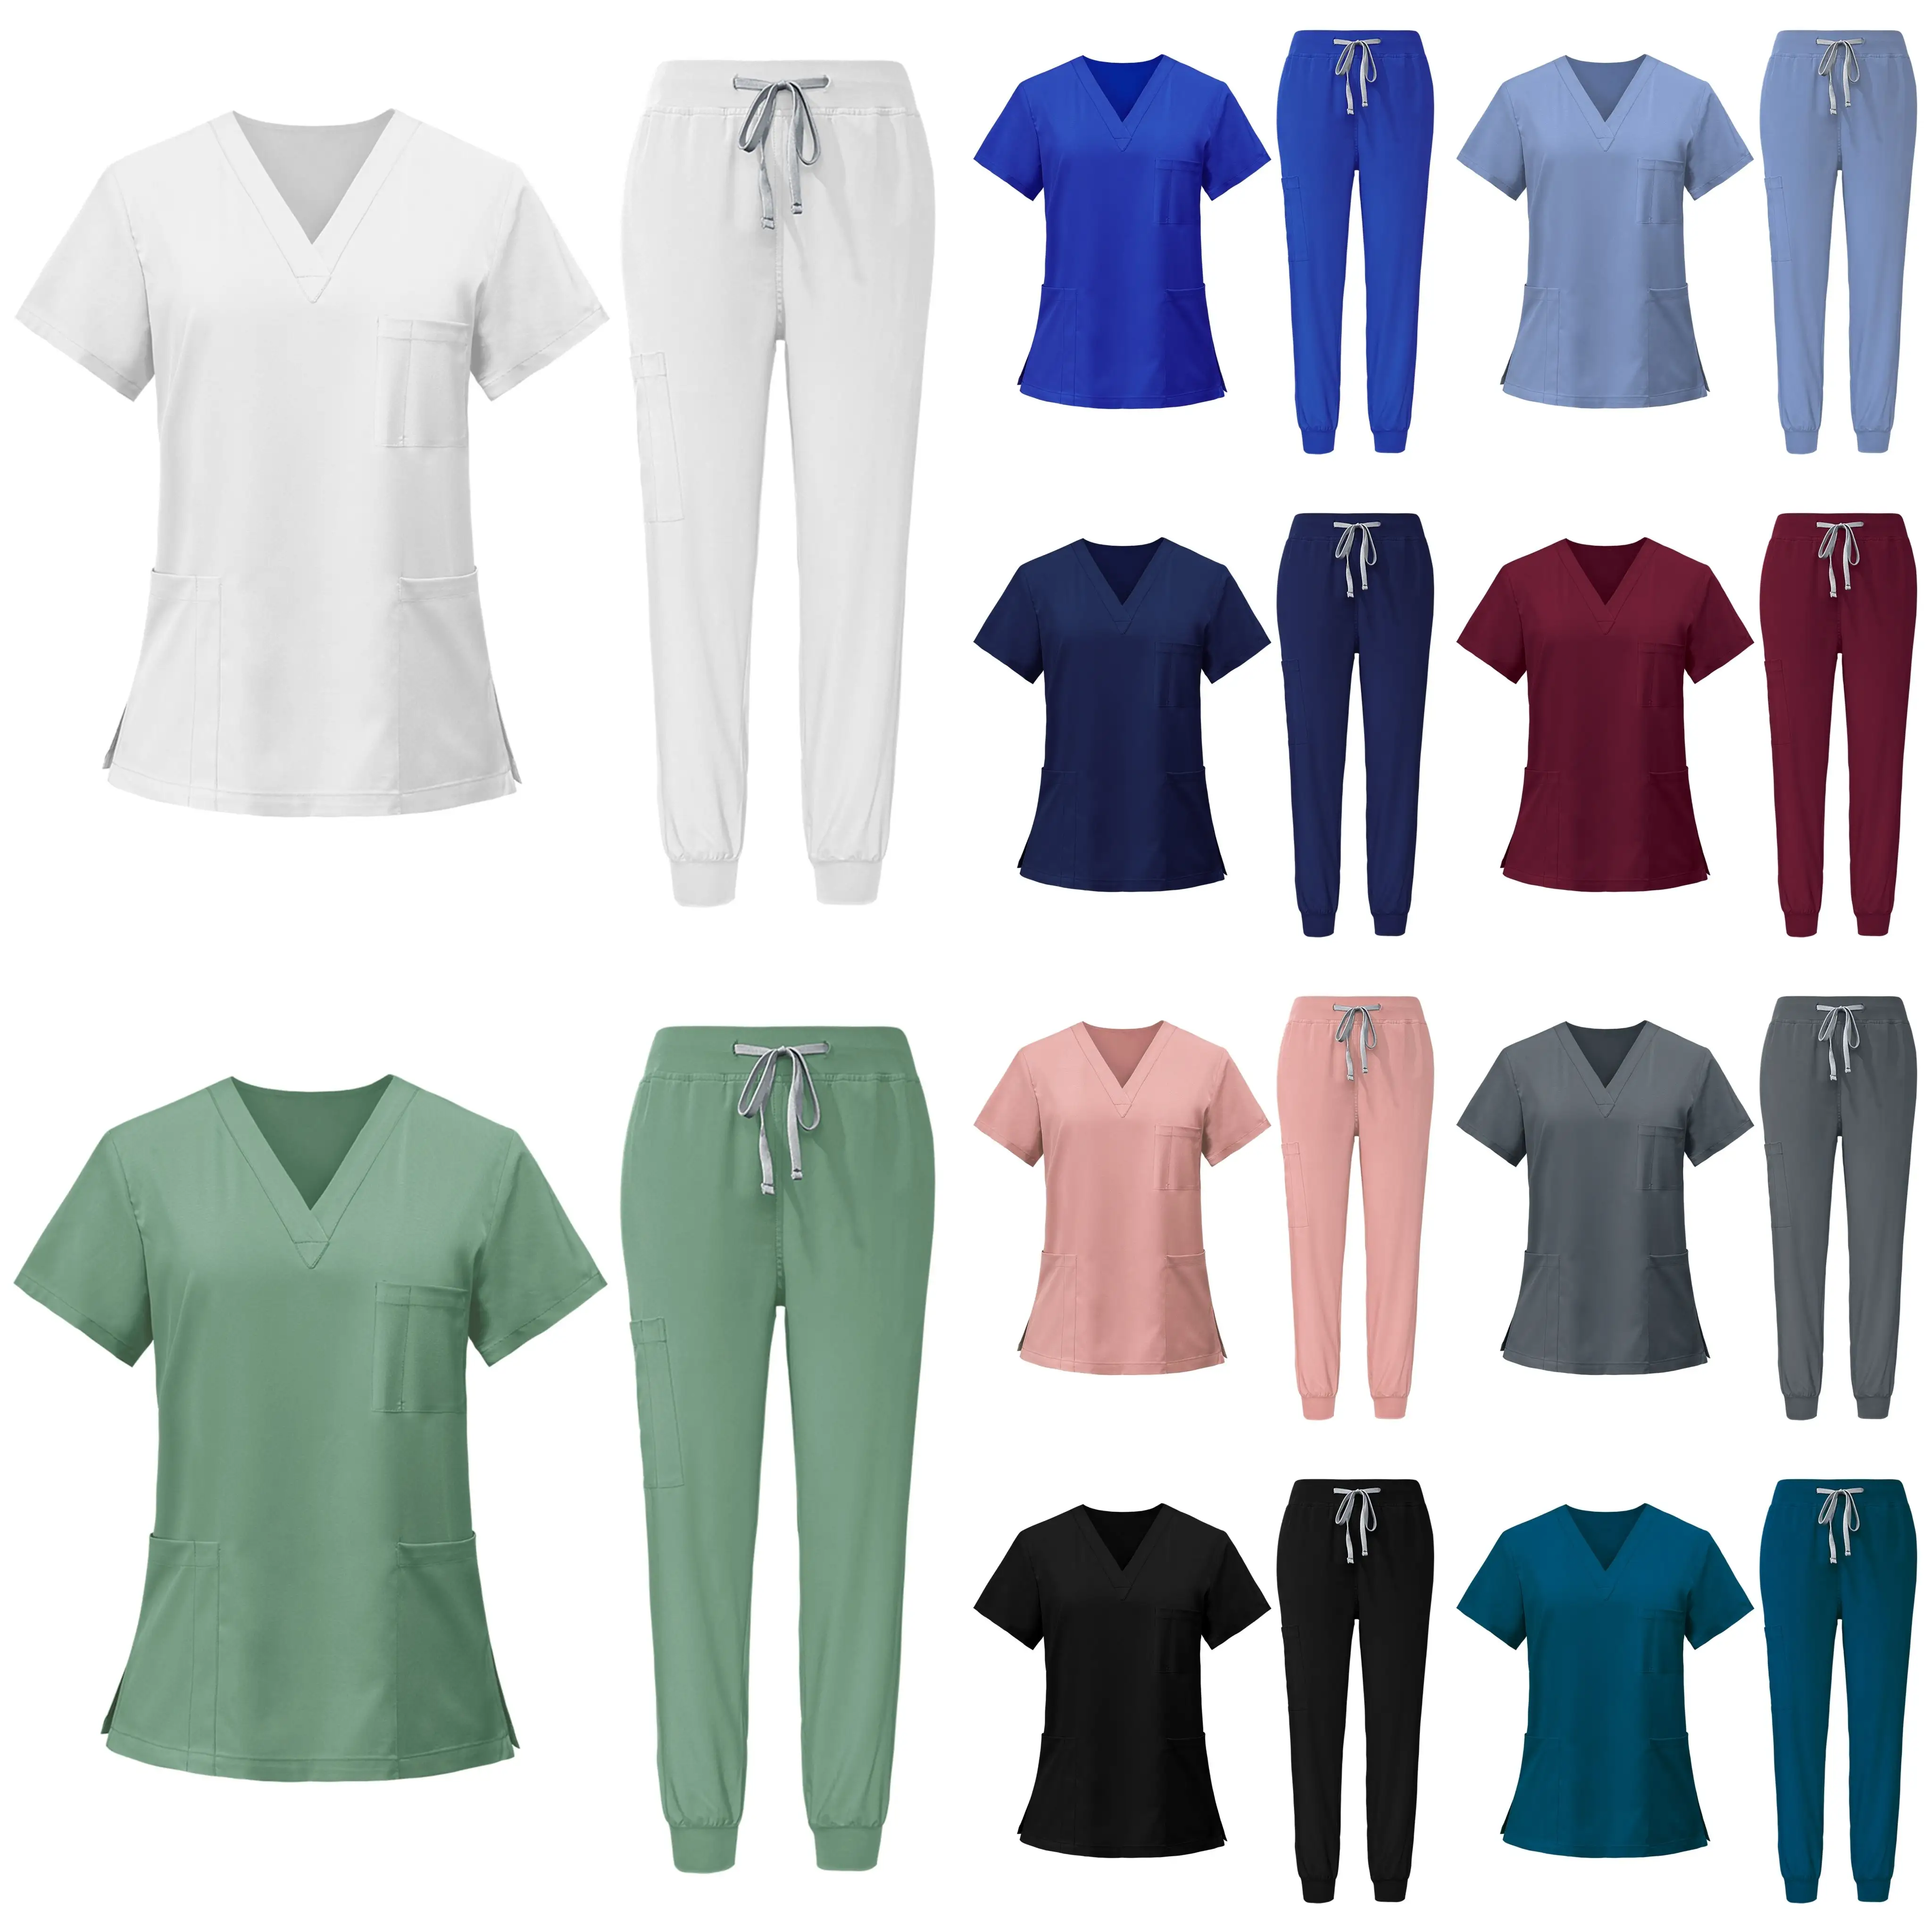 Rekbare Stof Spandex V-Hals Stijl S-3XL Zwart Blauw Groen Rood Wit Vrouwen Verpleegkundige Ziekenhuis Scrubs Medische Uniform Sets